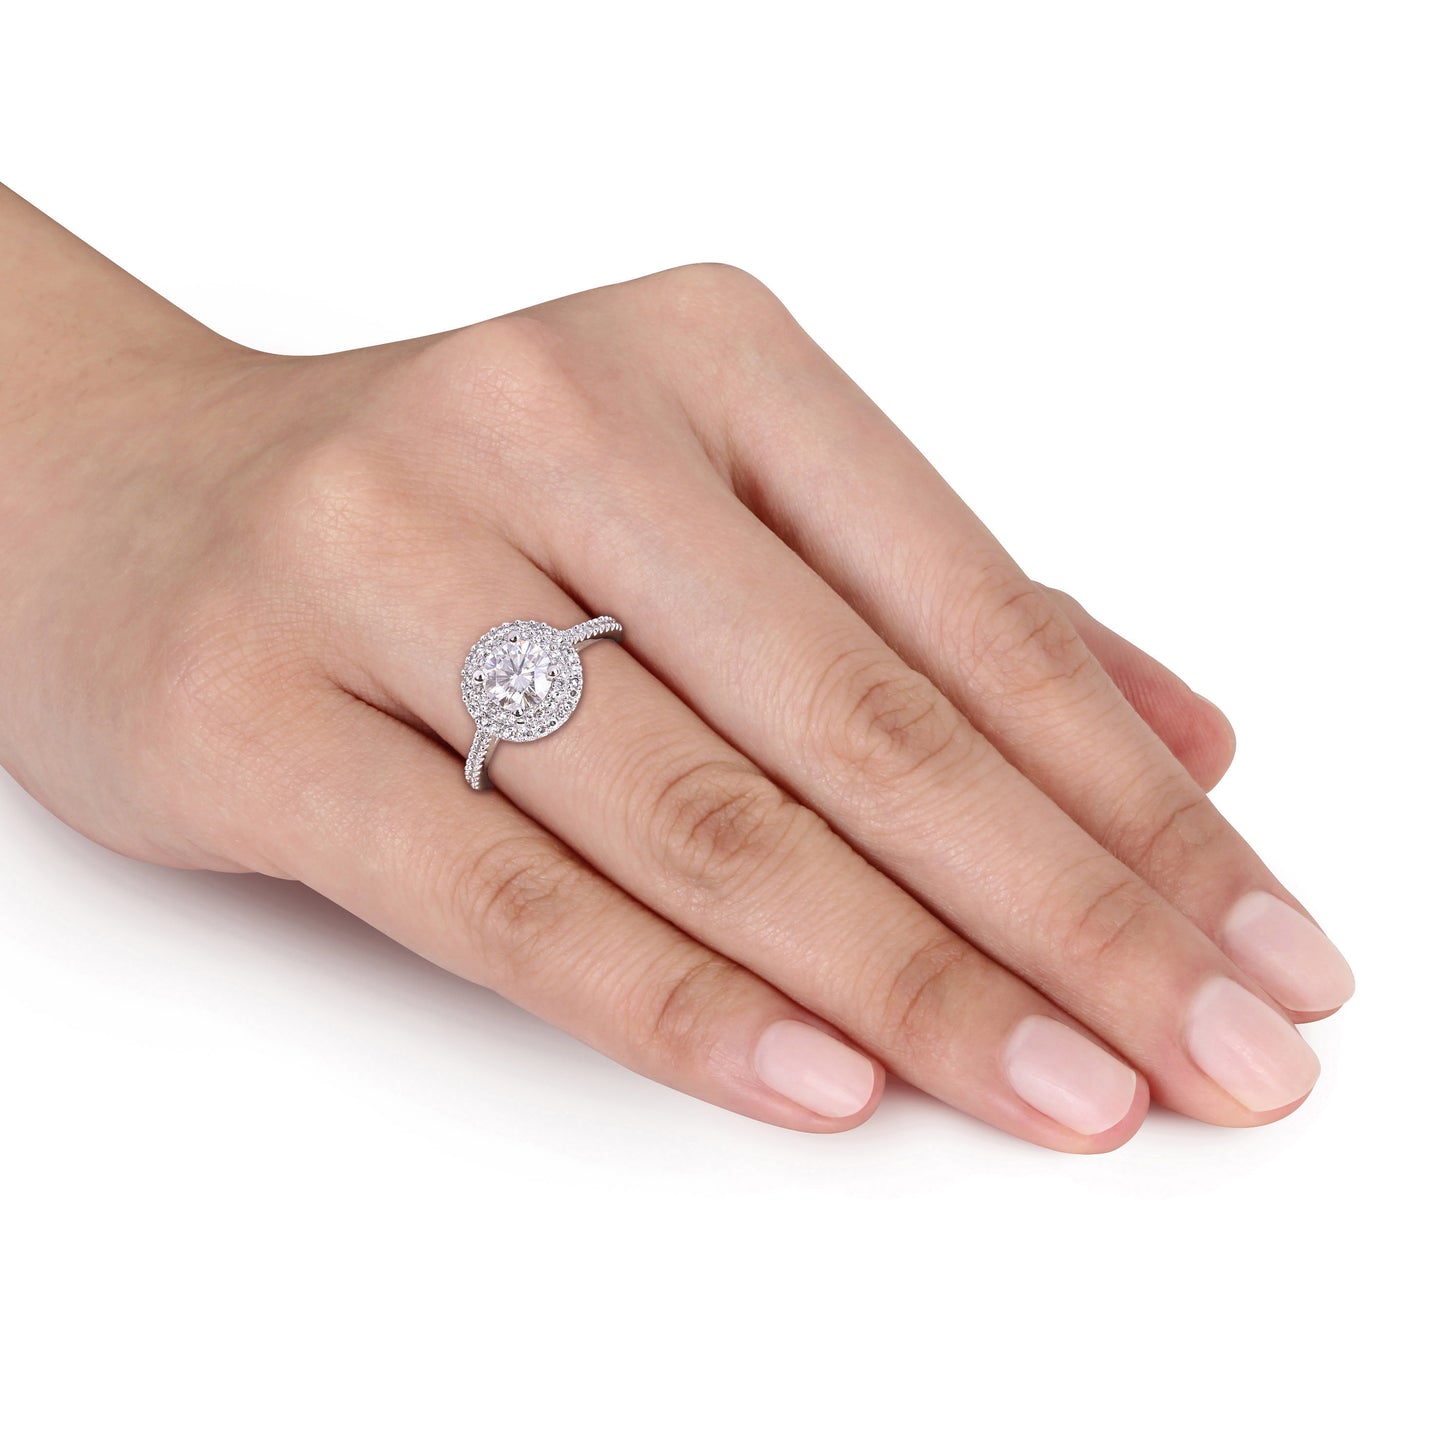 Round Cut Moissanite & Diamond Halo Ring in 14k White Gold